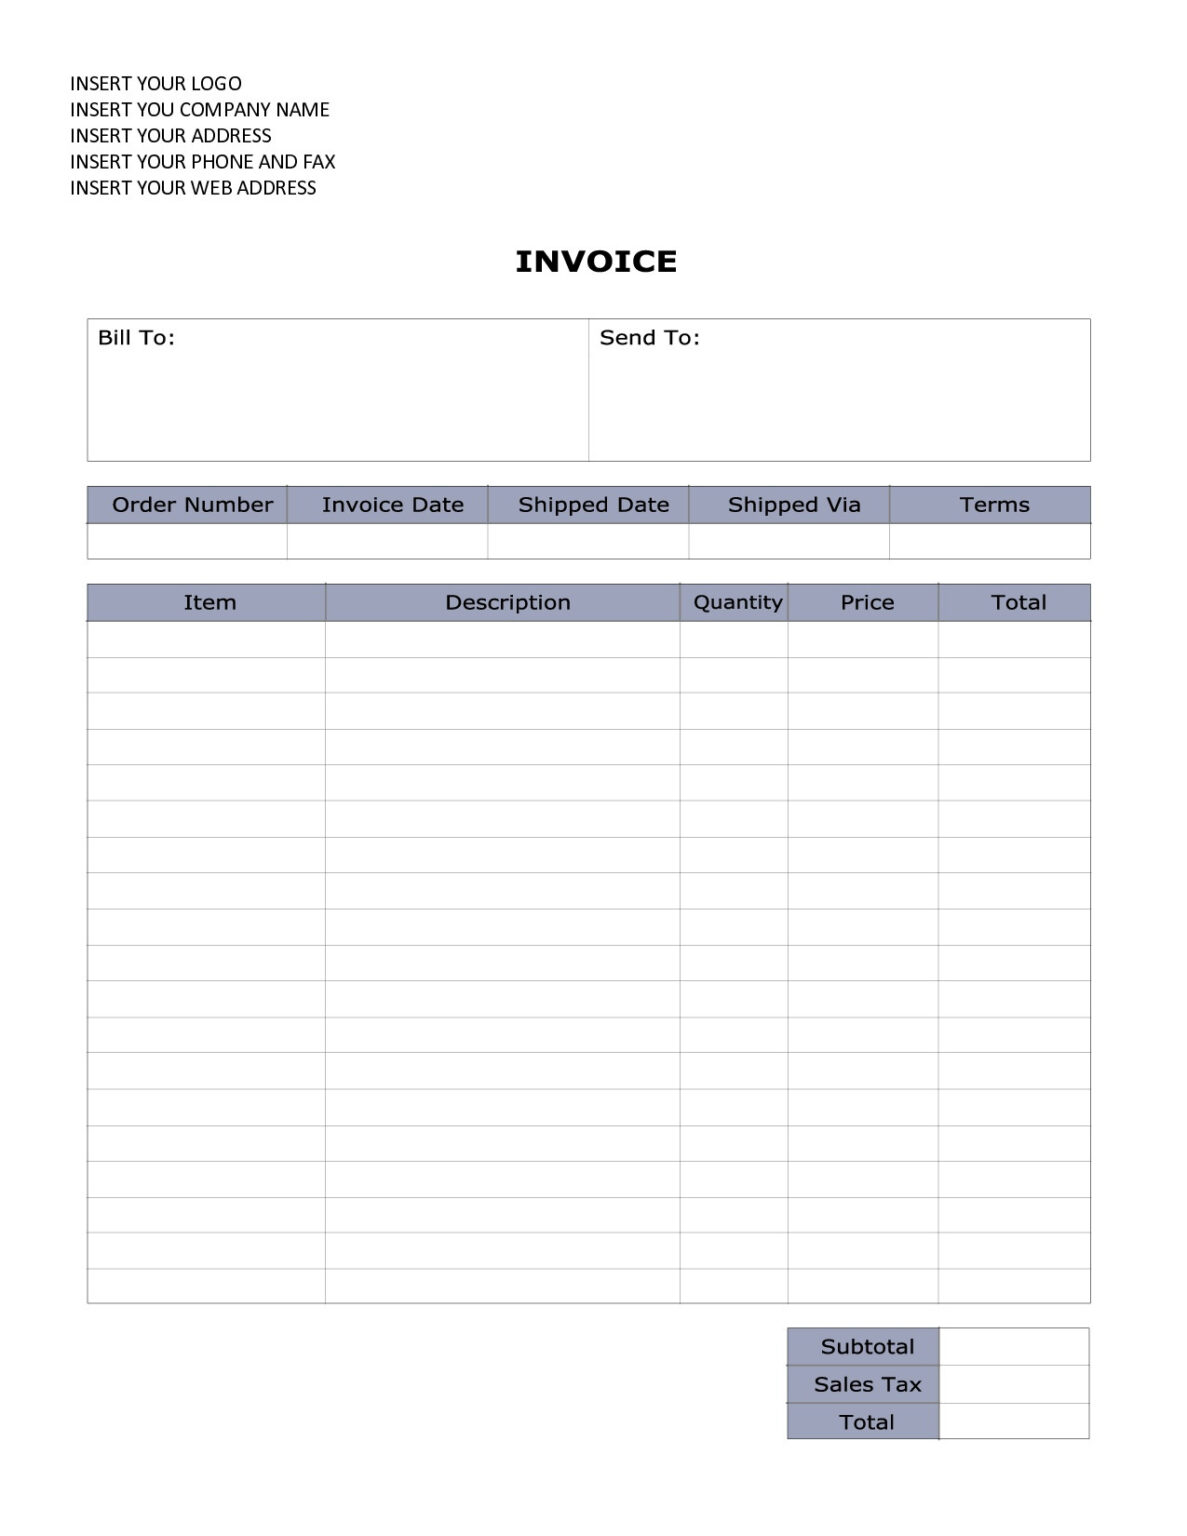 Generic Invoice Template Word Best Of 5 Generic Invoice Regarding